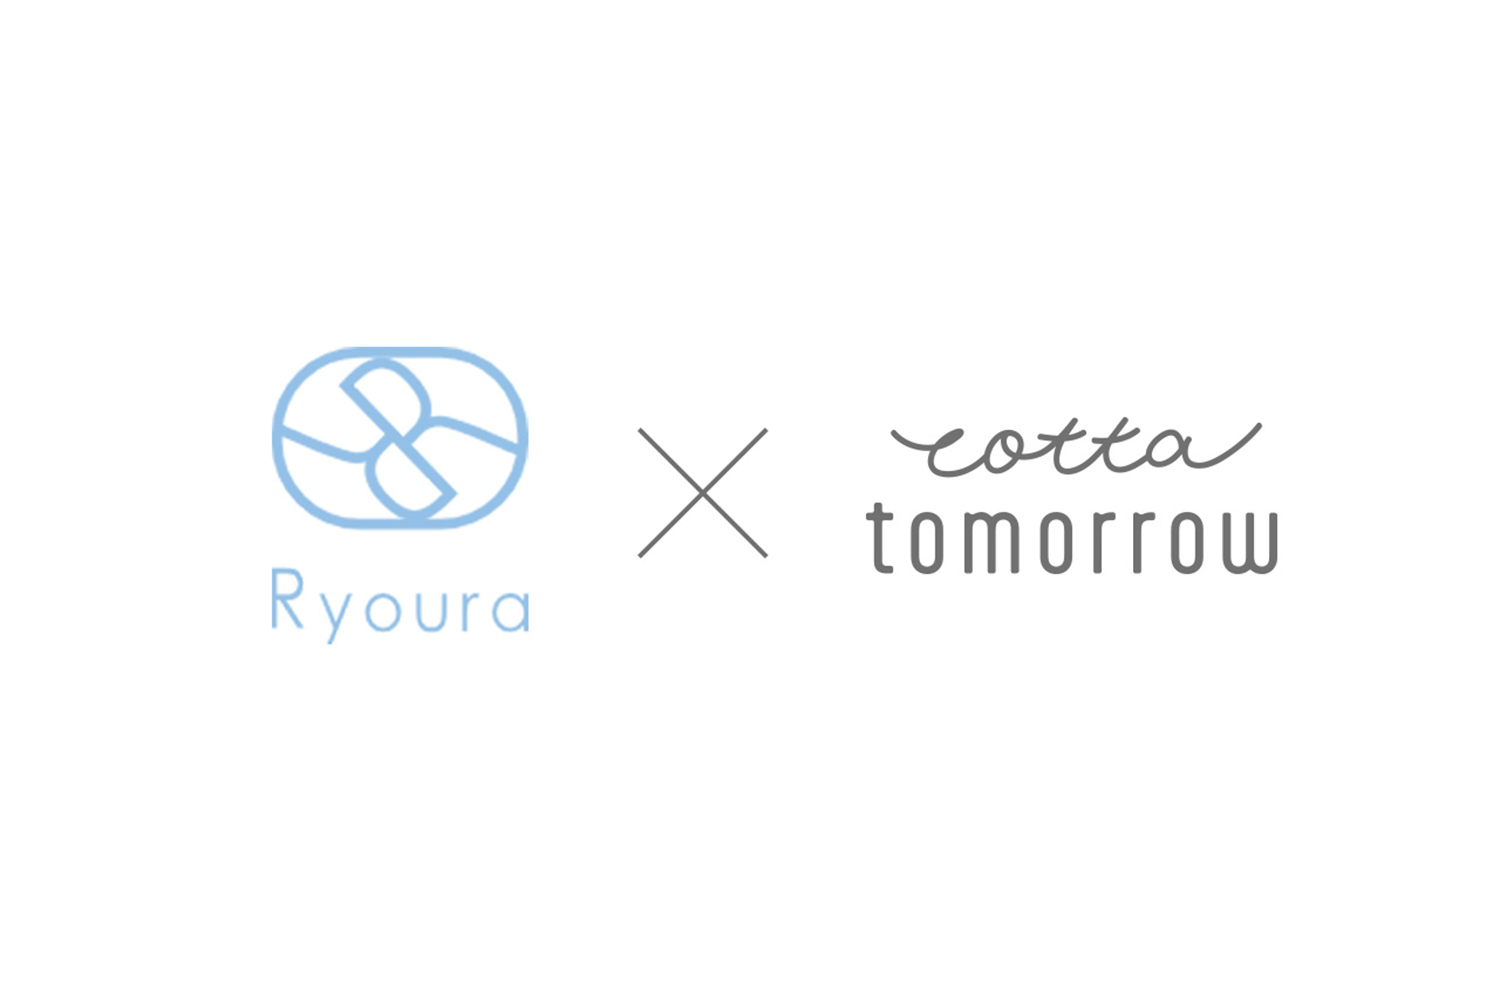 「Ryoura」×cotta tomorrow の米粉クッキーを長期保有株主優待品として提供